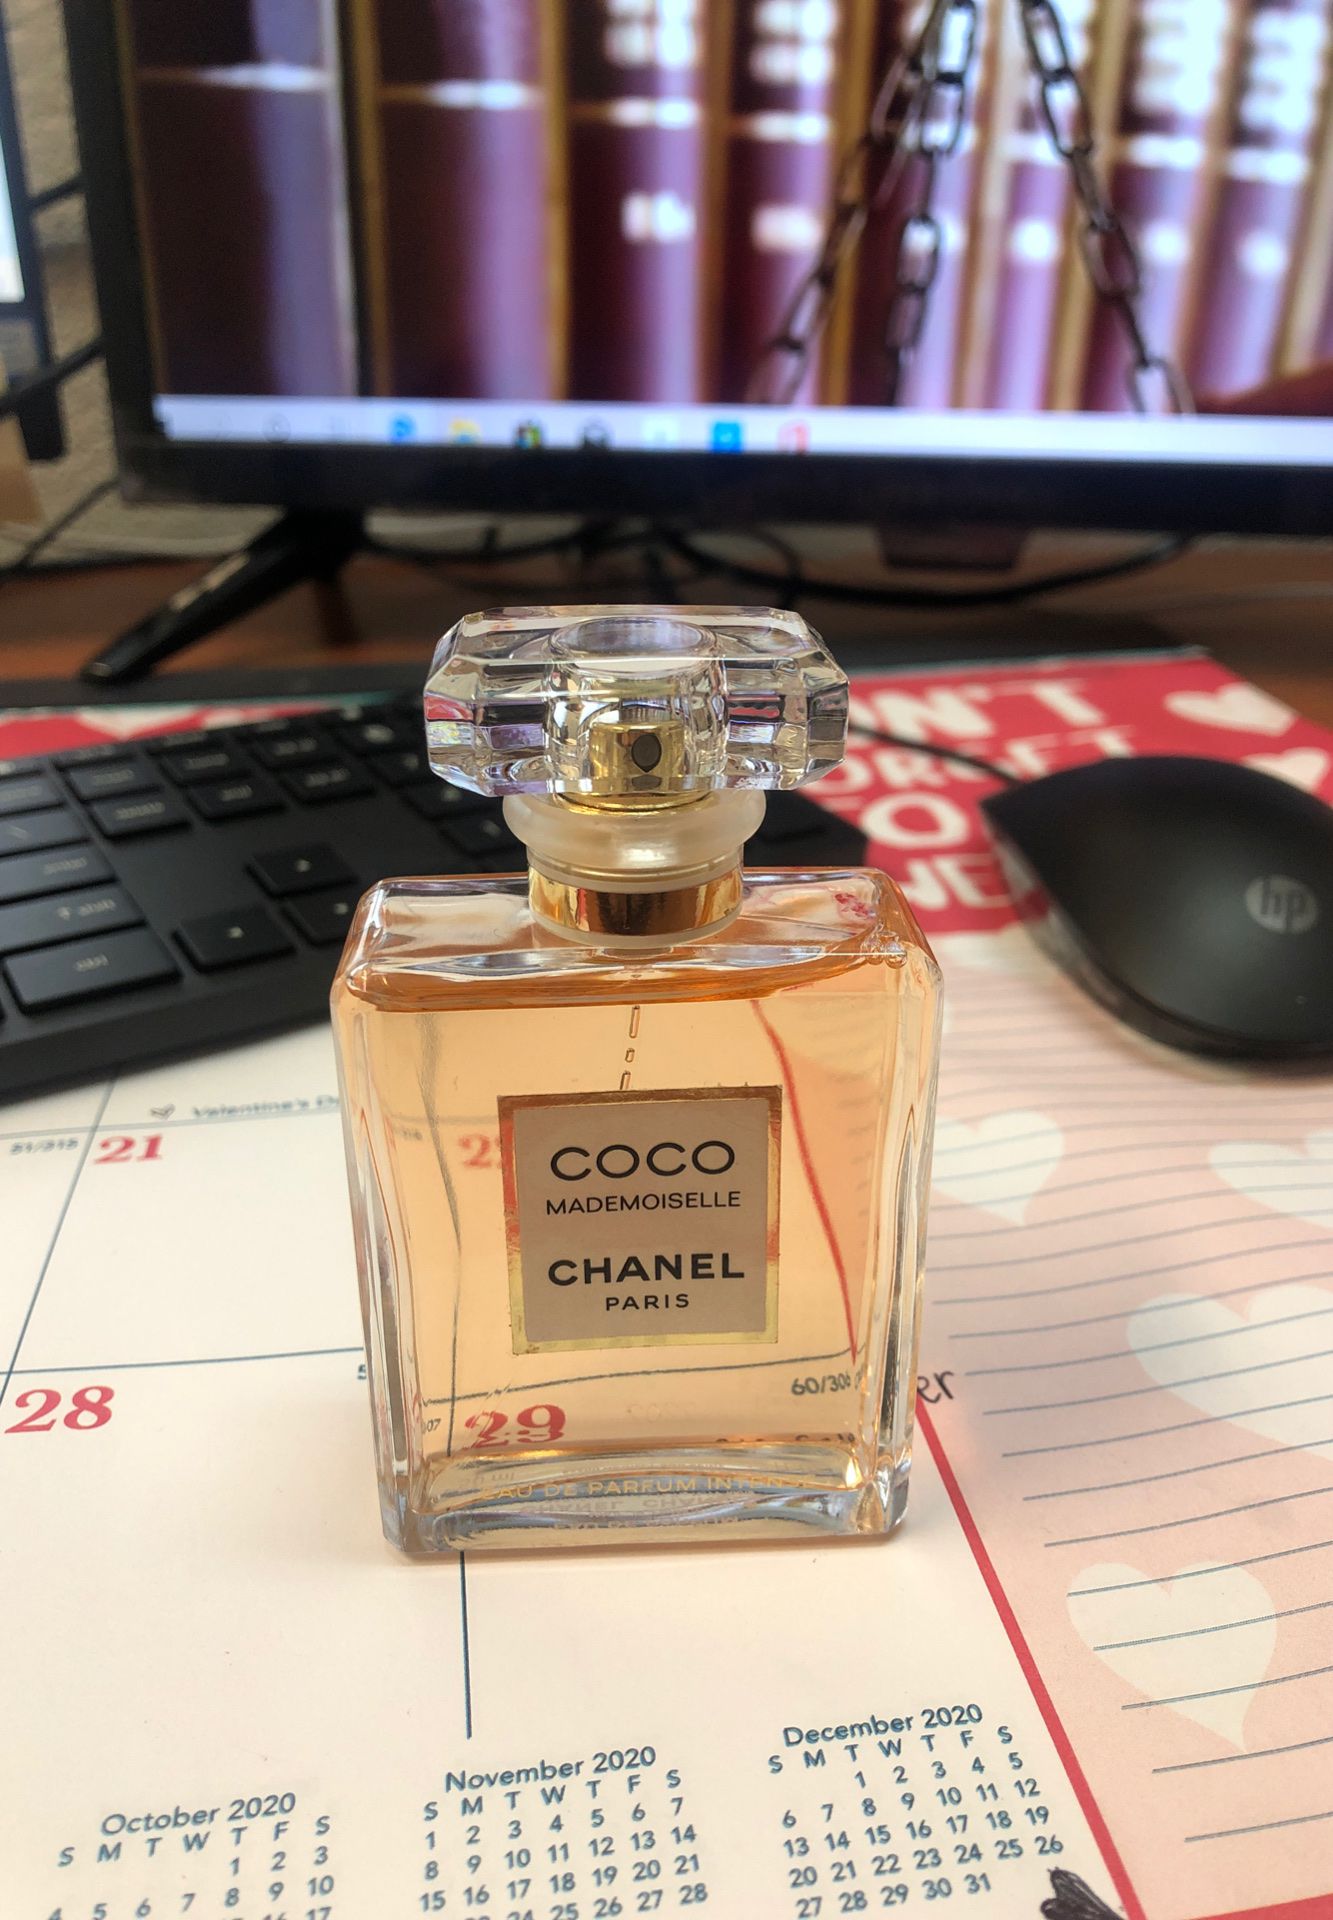 Coco mademoiselle Chanel Perfume